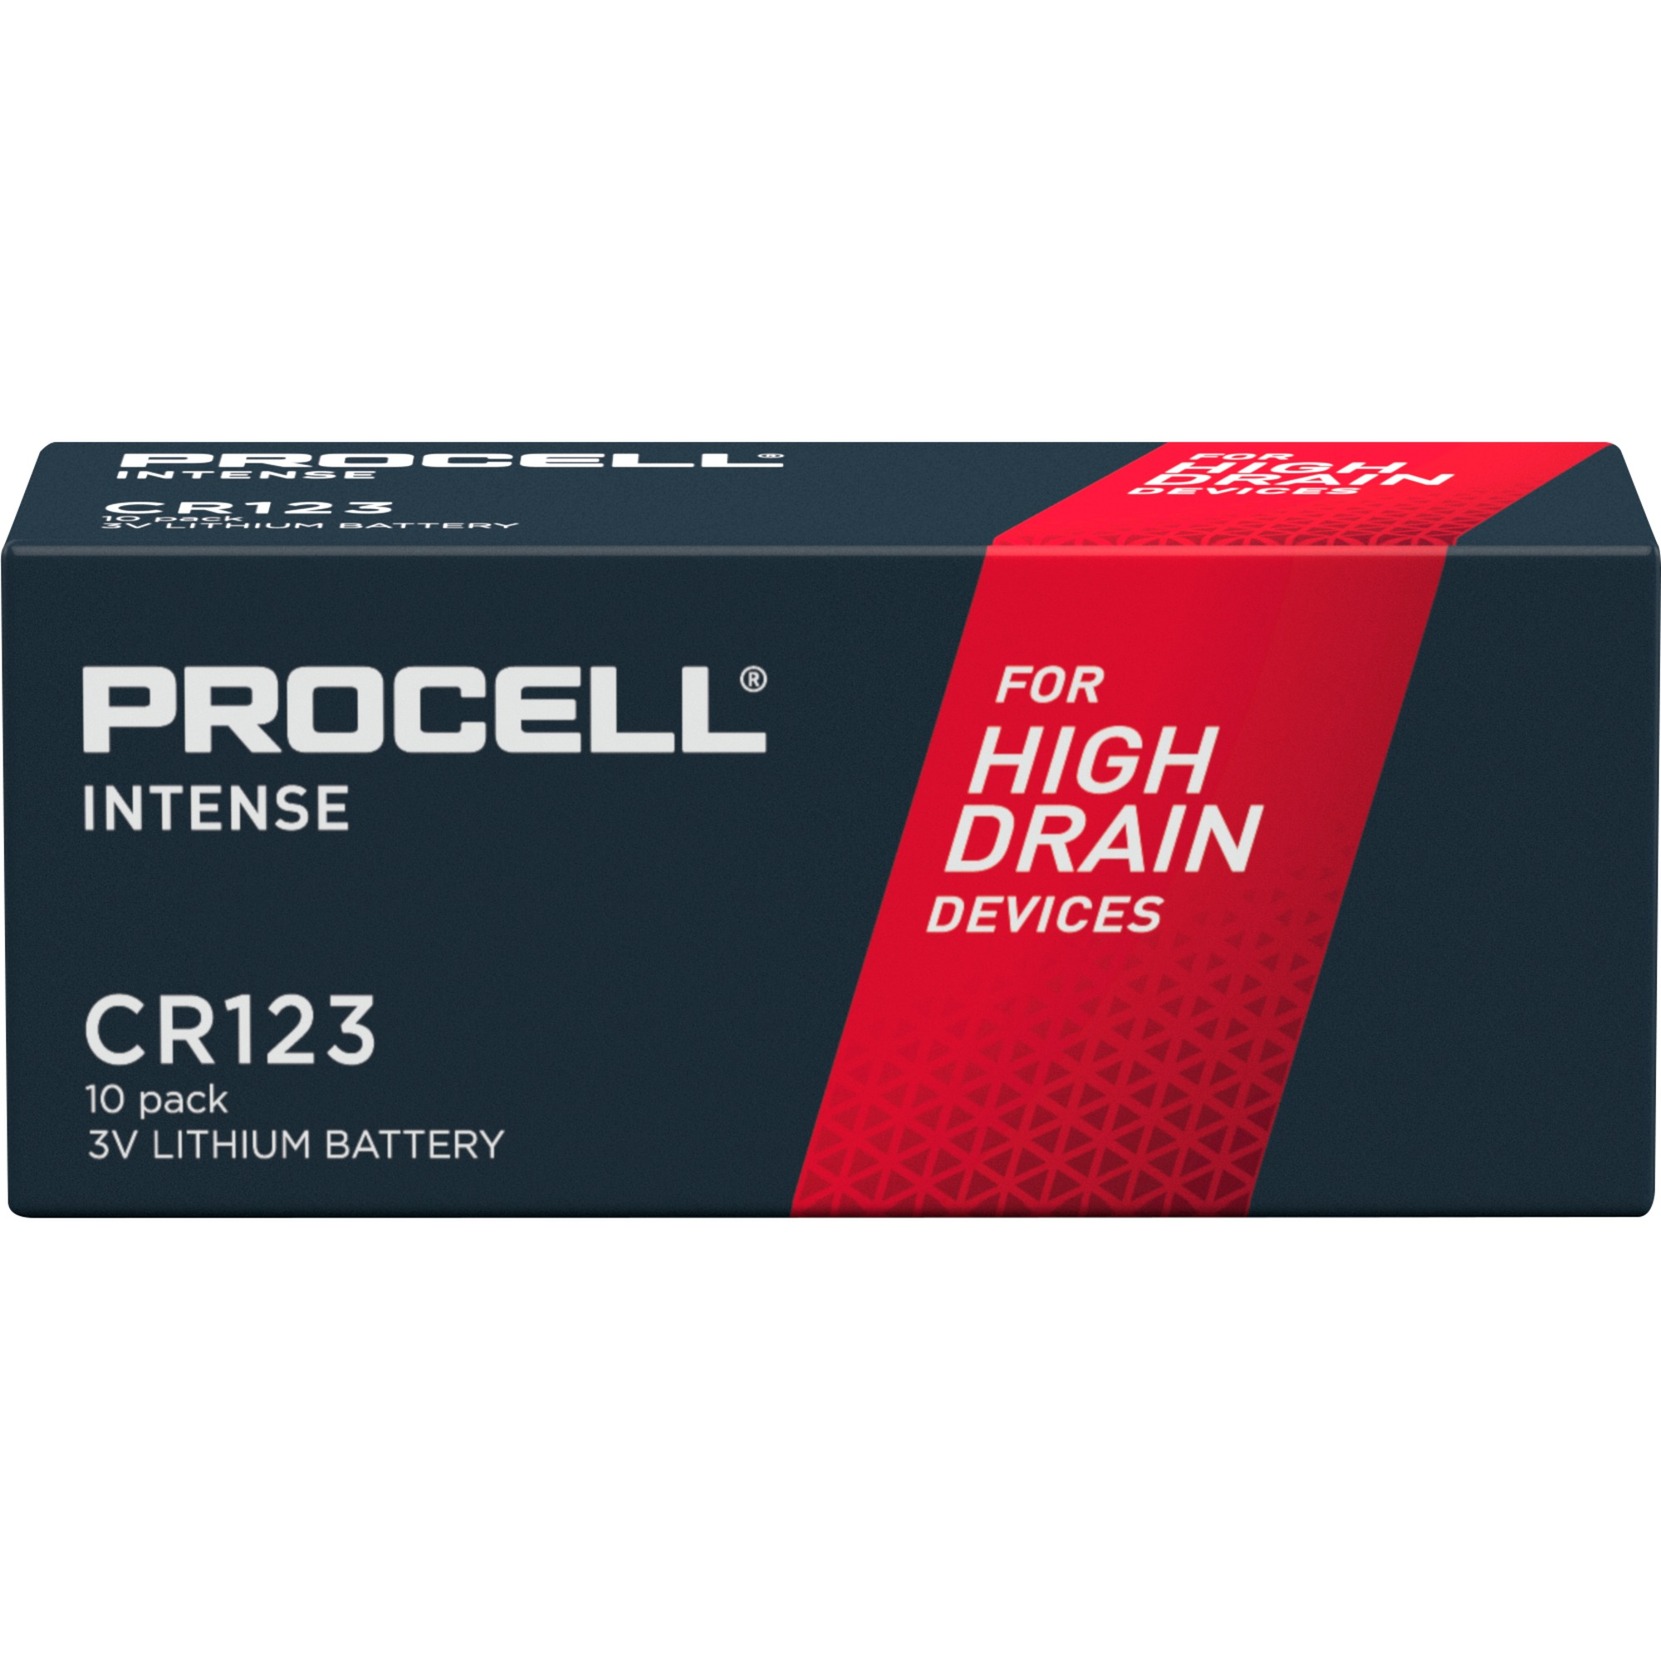 Procell CR123A High Power Lithium Intense Batterie von Duracell